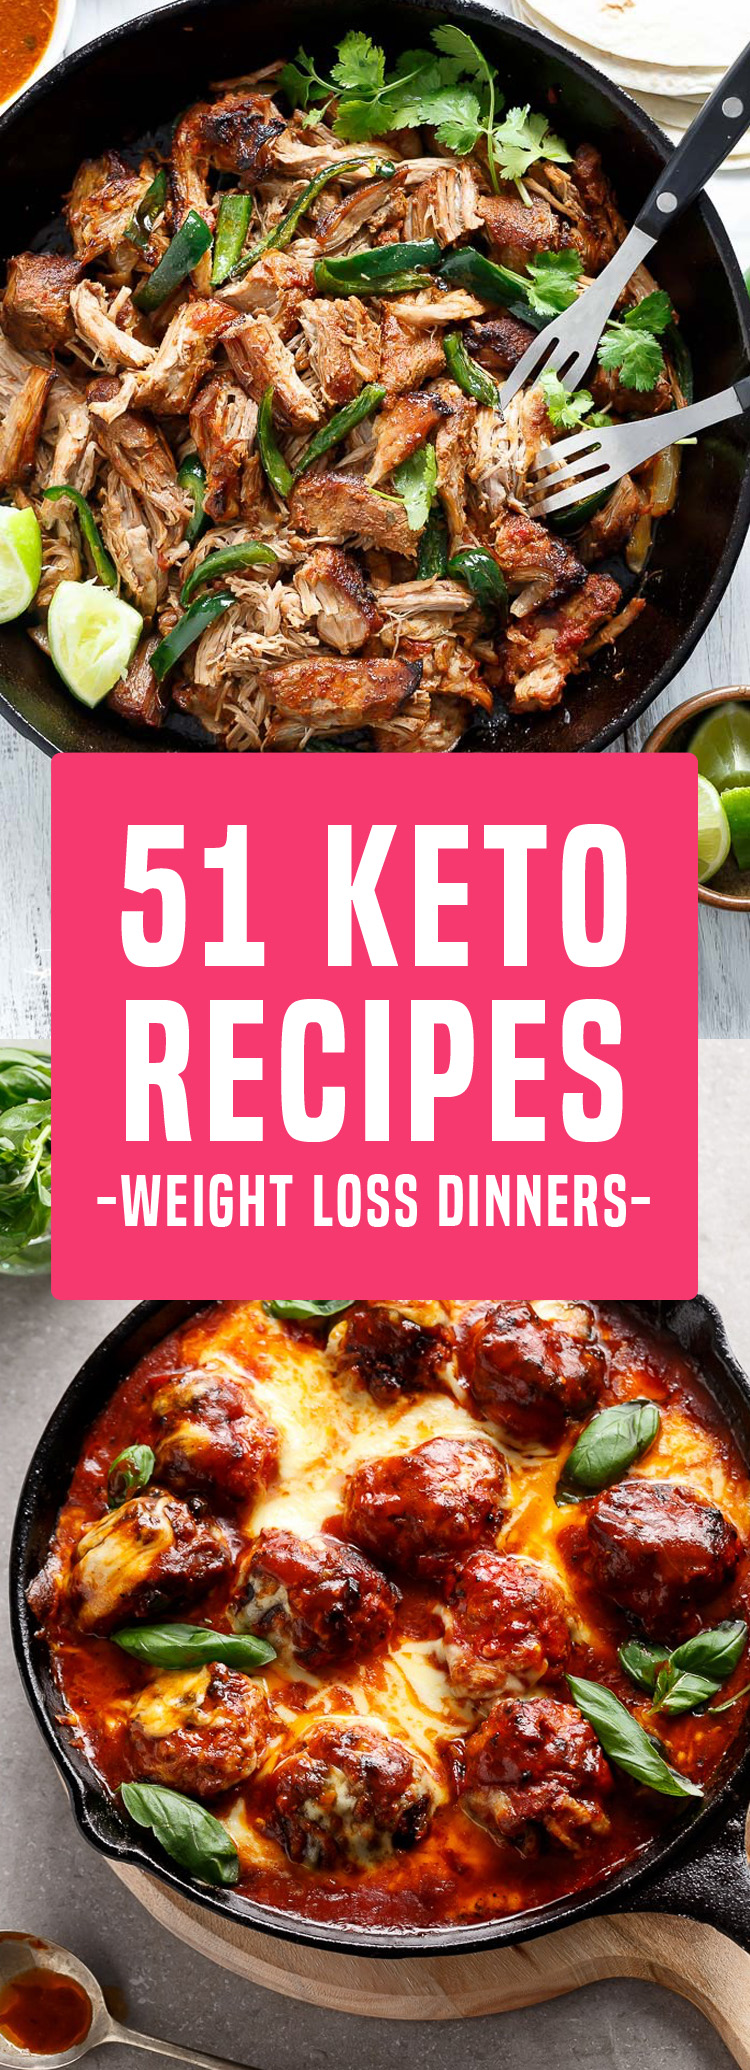 Keto-Recipes.jpg